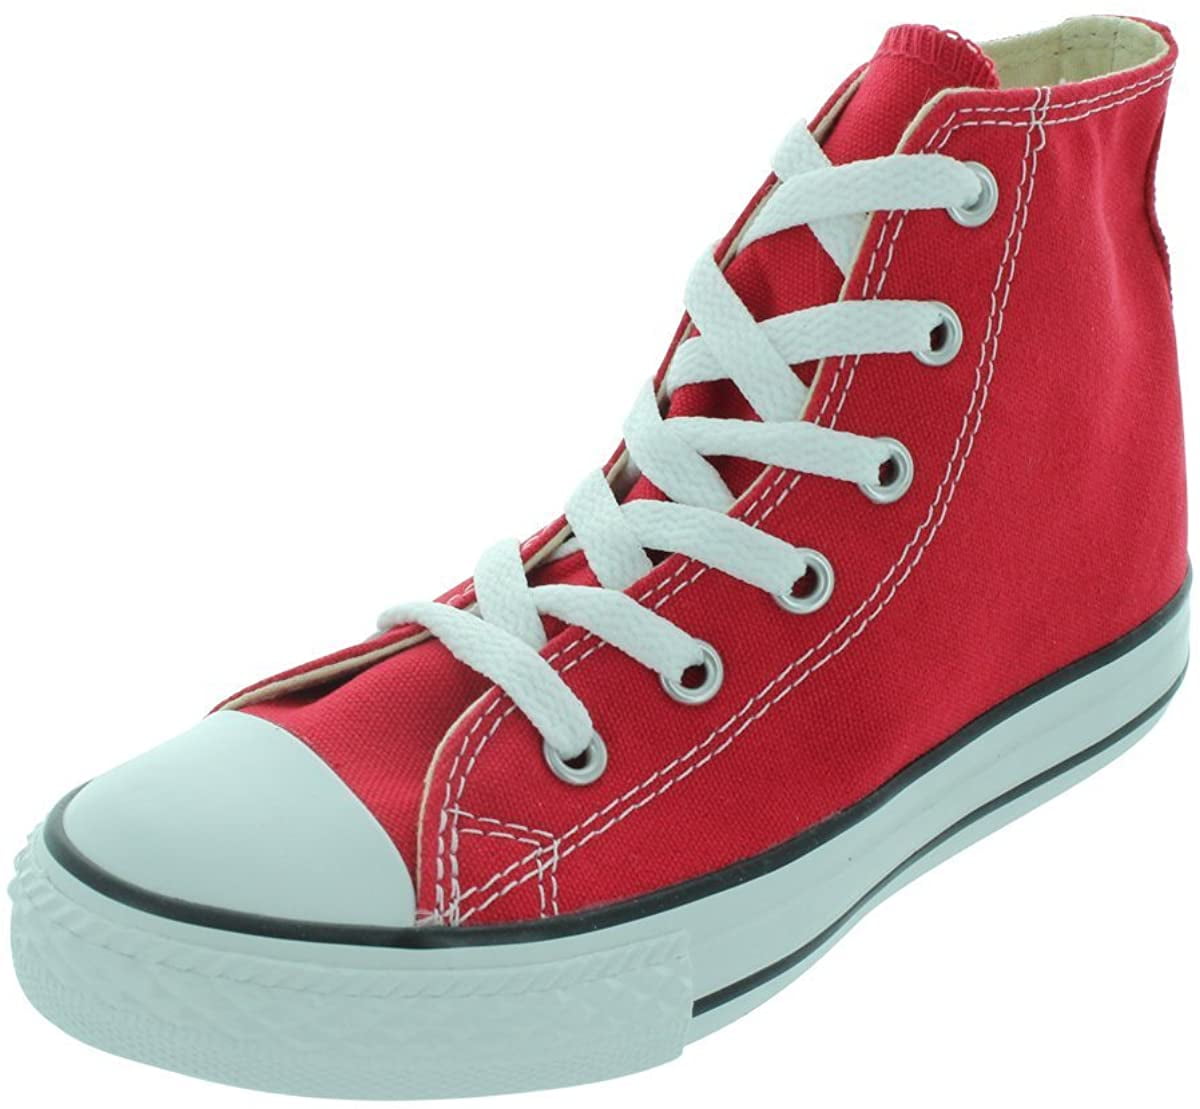 Converse Clothing Chuck Taylor Star High Top Sneaker, Red, 12.5 - Walmart.com